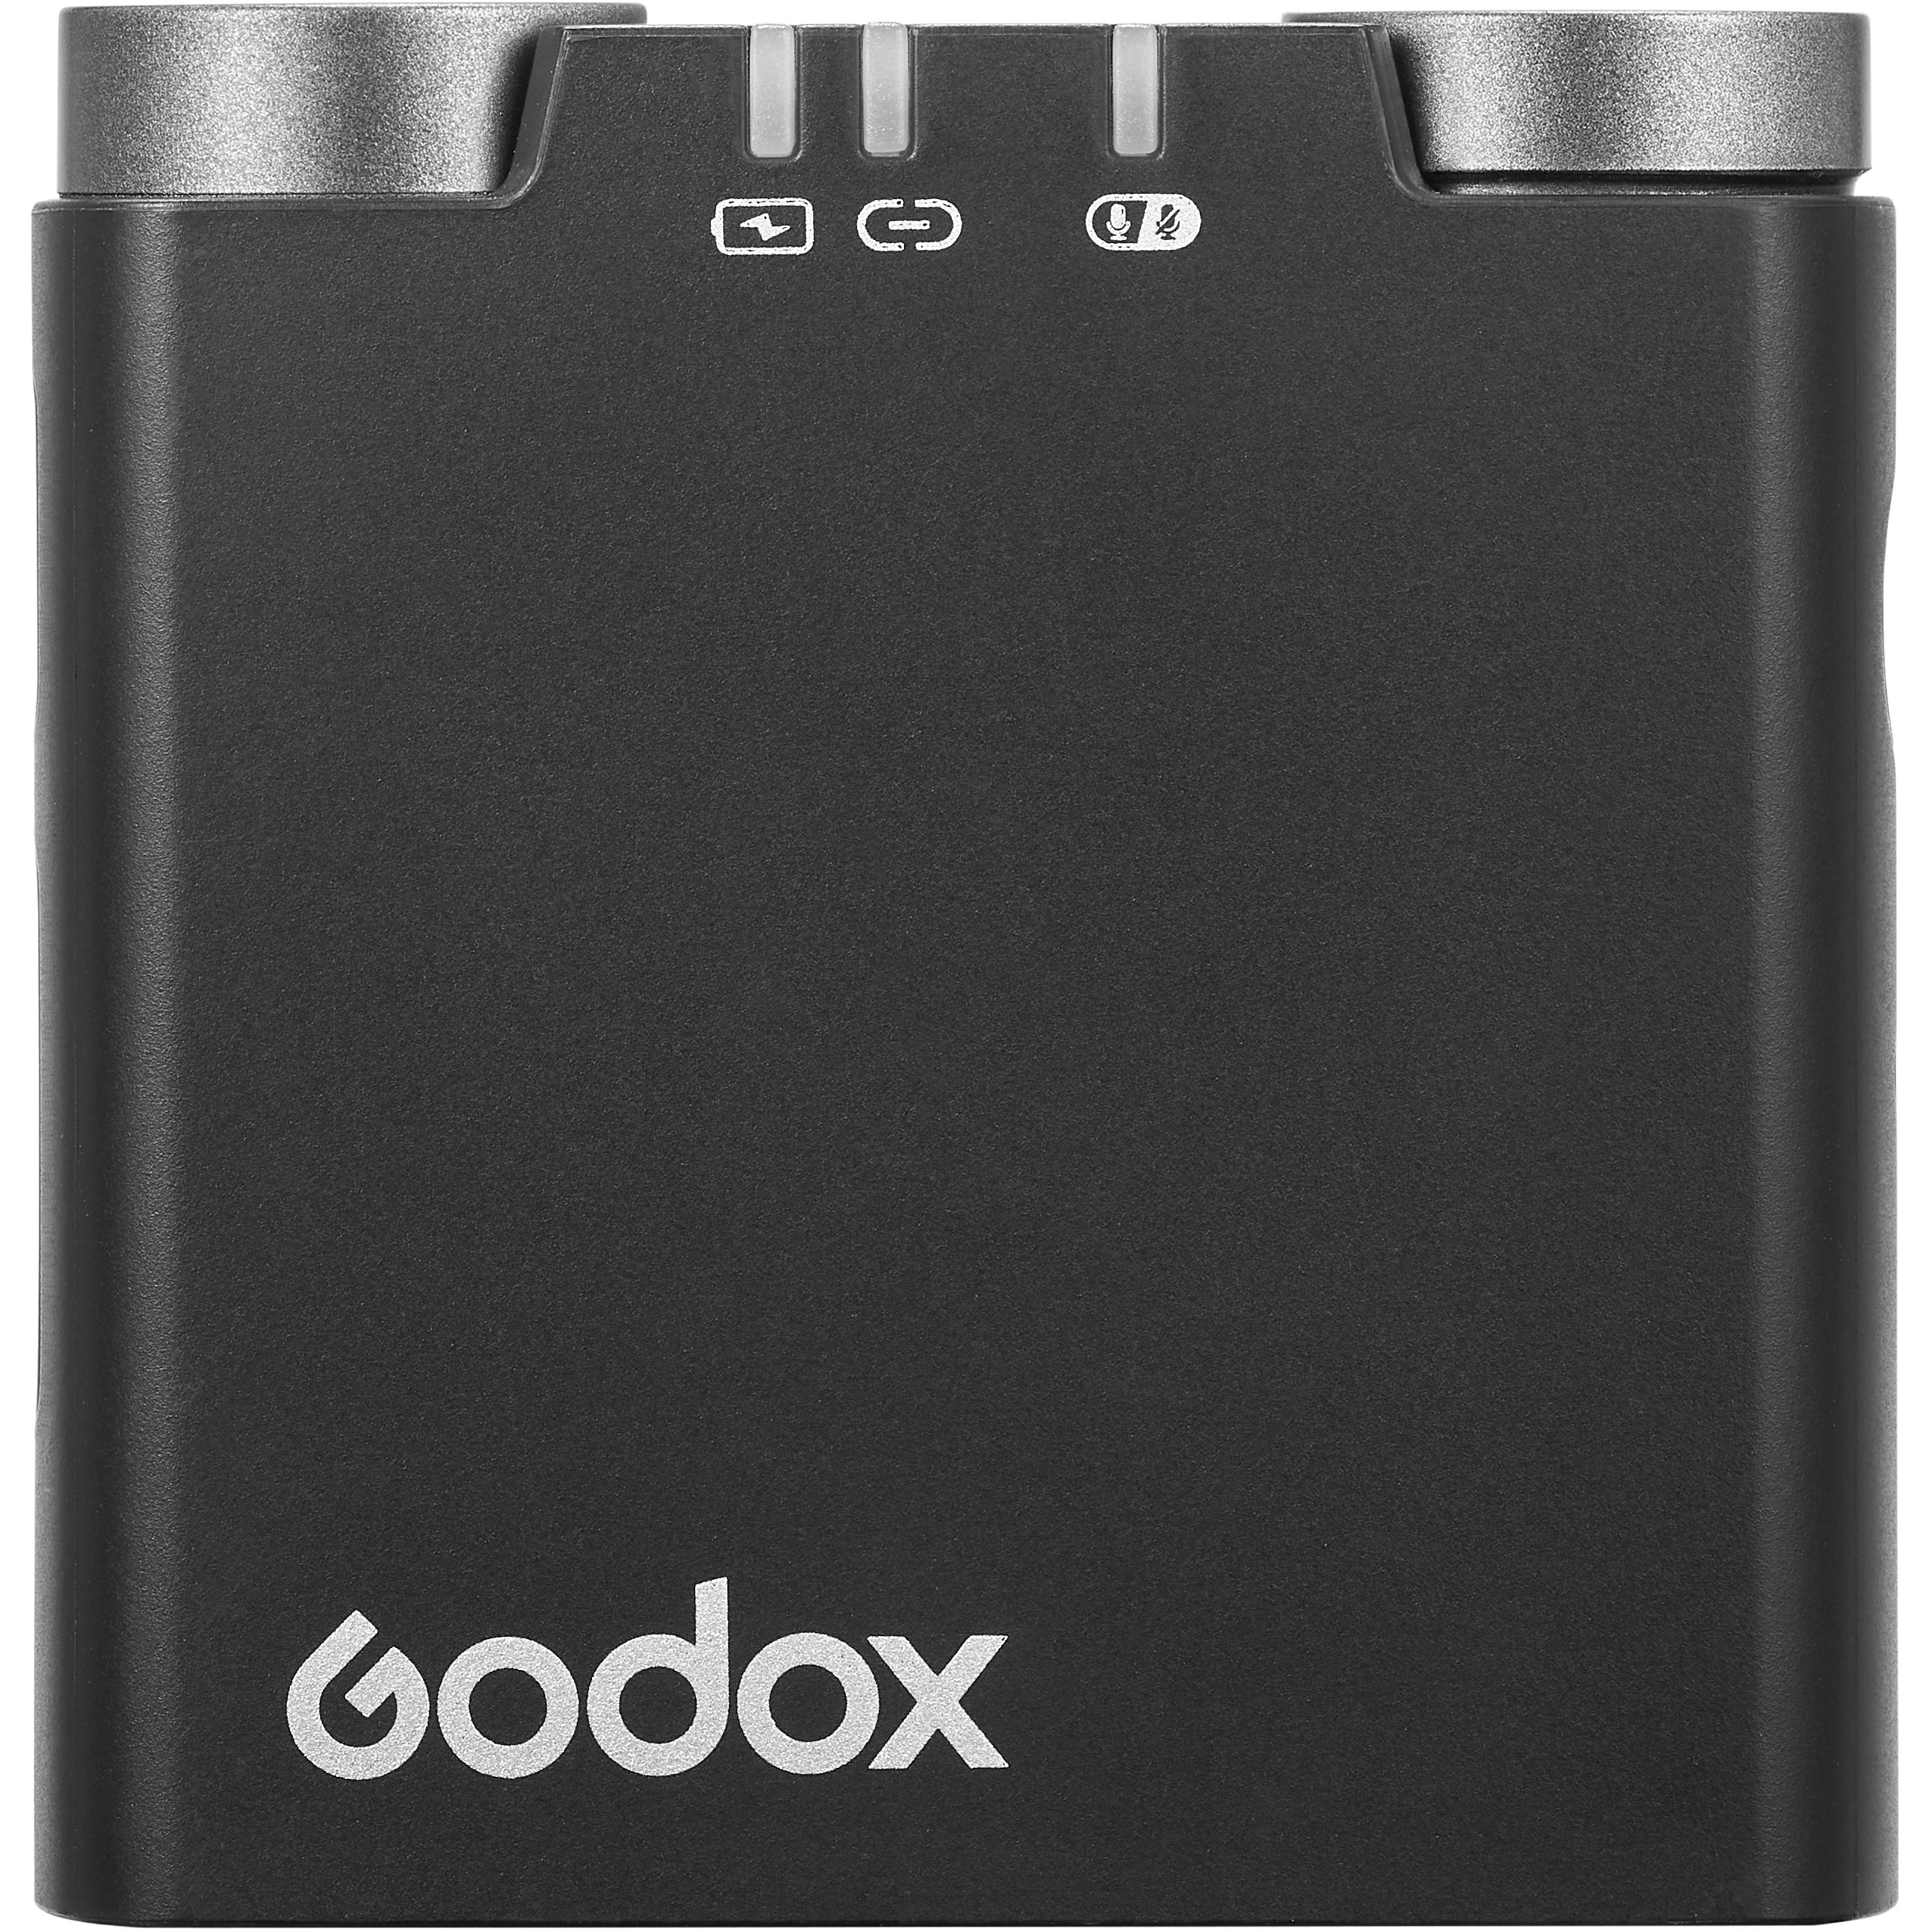    Godox Virso S M2    Ultra-mart